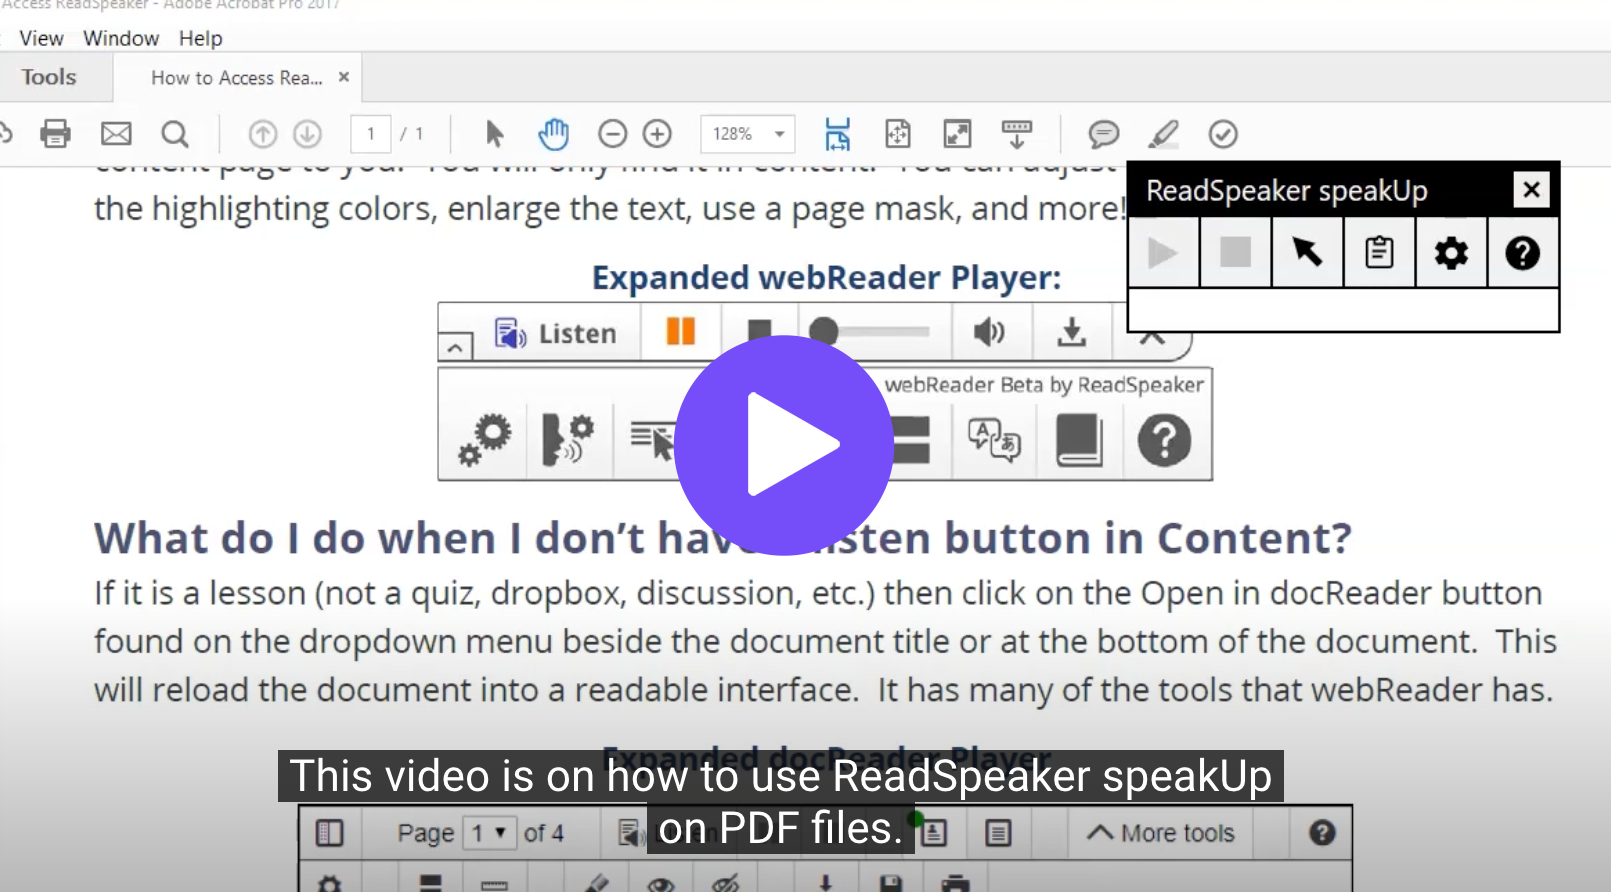 ReadSpeaker webReader - ReadSpeaker